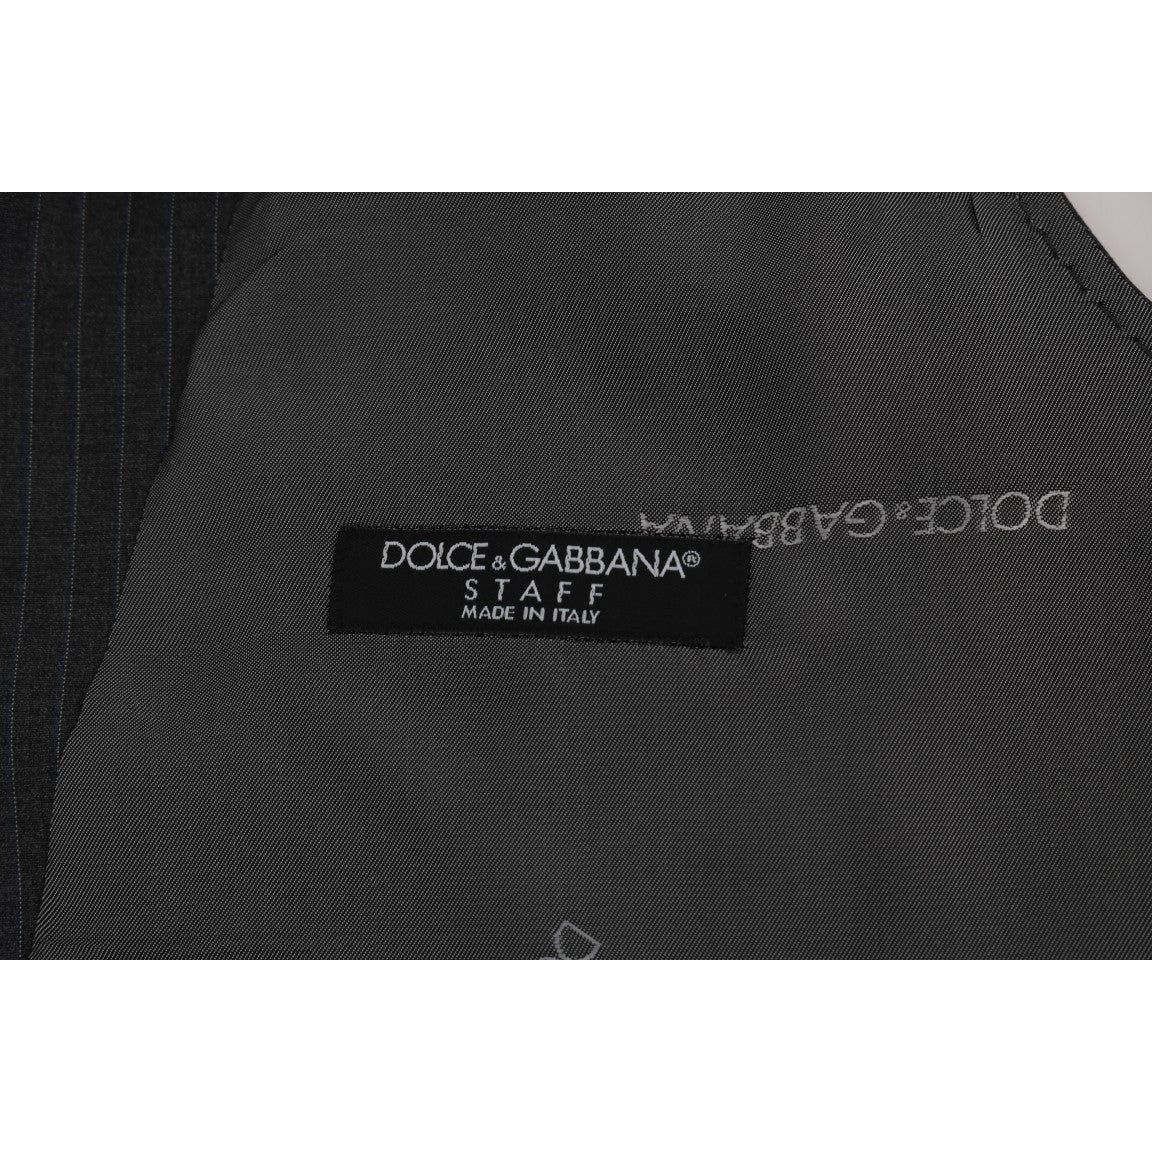 Dolce & Gabbana Elegant Gray Striped Waistcoat Vest gray-staff-cotton-striped-vest-1 478457-gray-staff-cotton-striped-vest-2-5.jpg